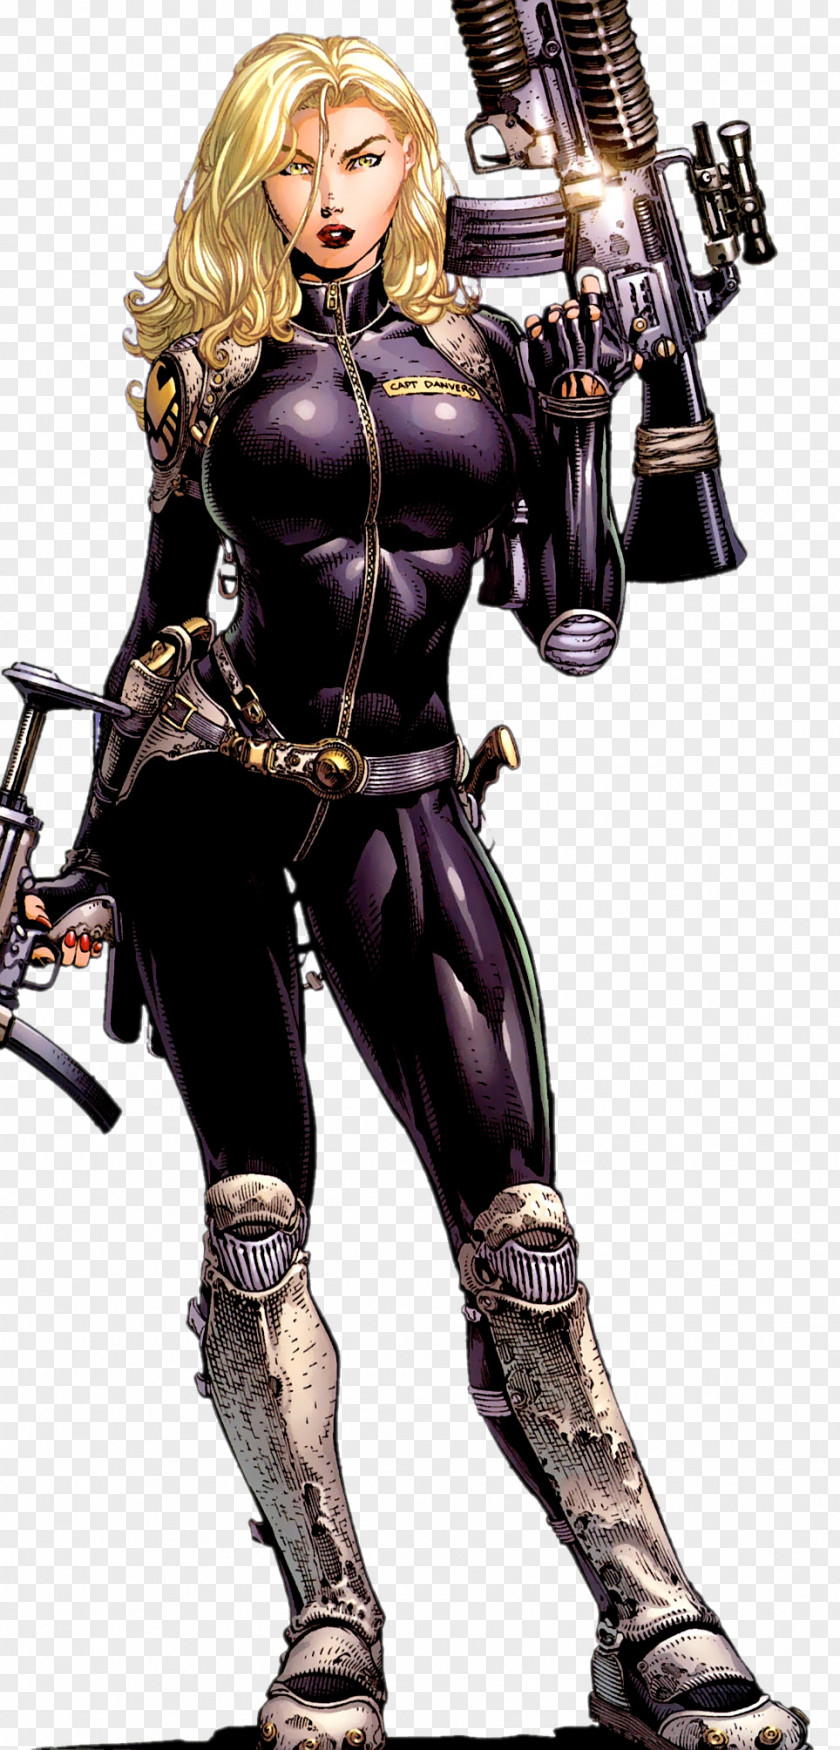 Powerful Woman Captain America Black Widow Nick Fury Carol Danvers Daisy Johnson PNG